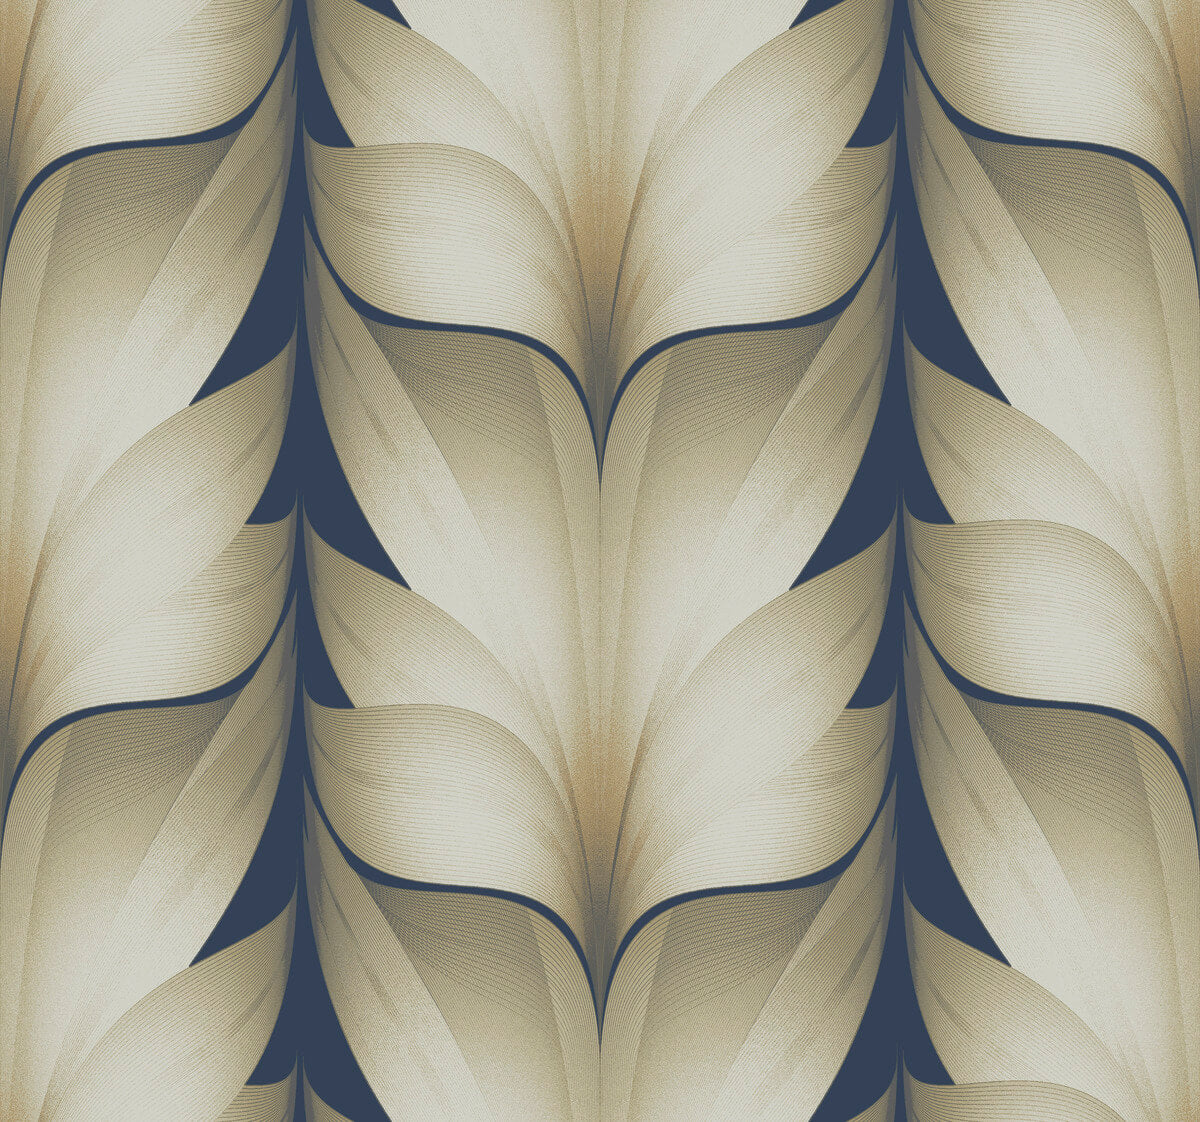 Candice Olson Casual Elegance Lotus Light Stripe Wallpaper - Navy Blue